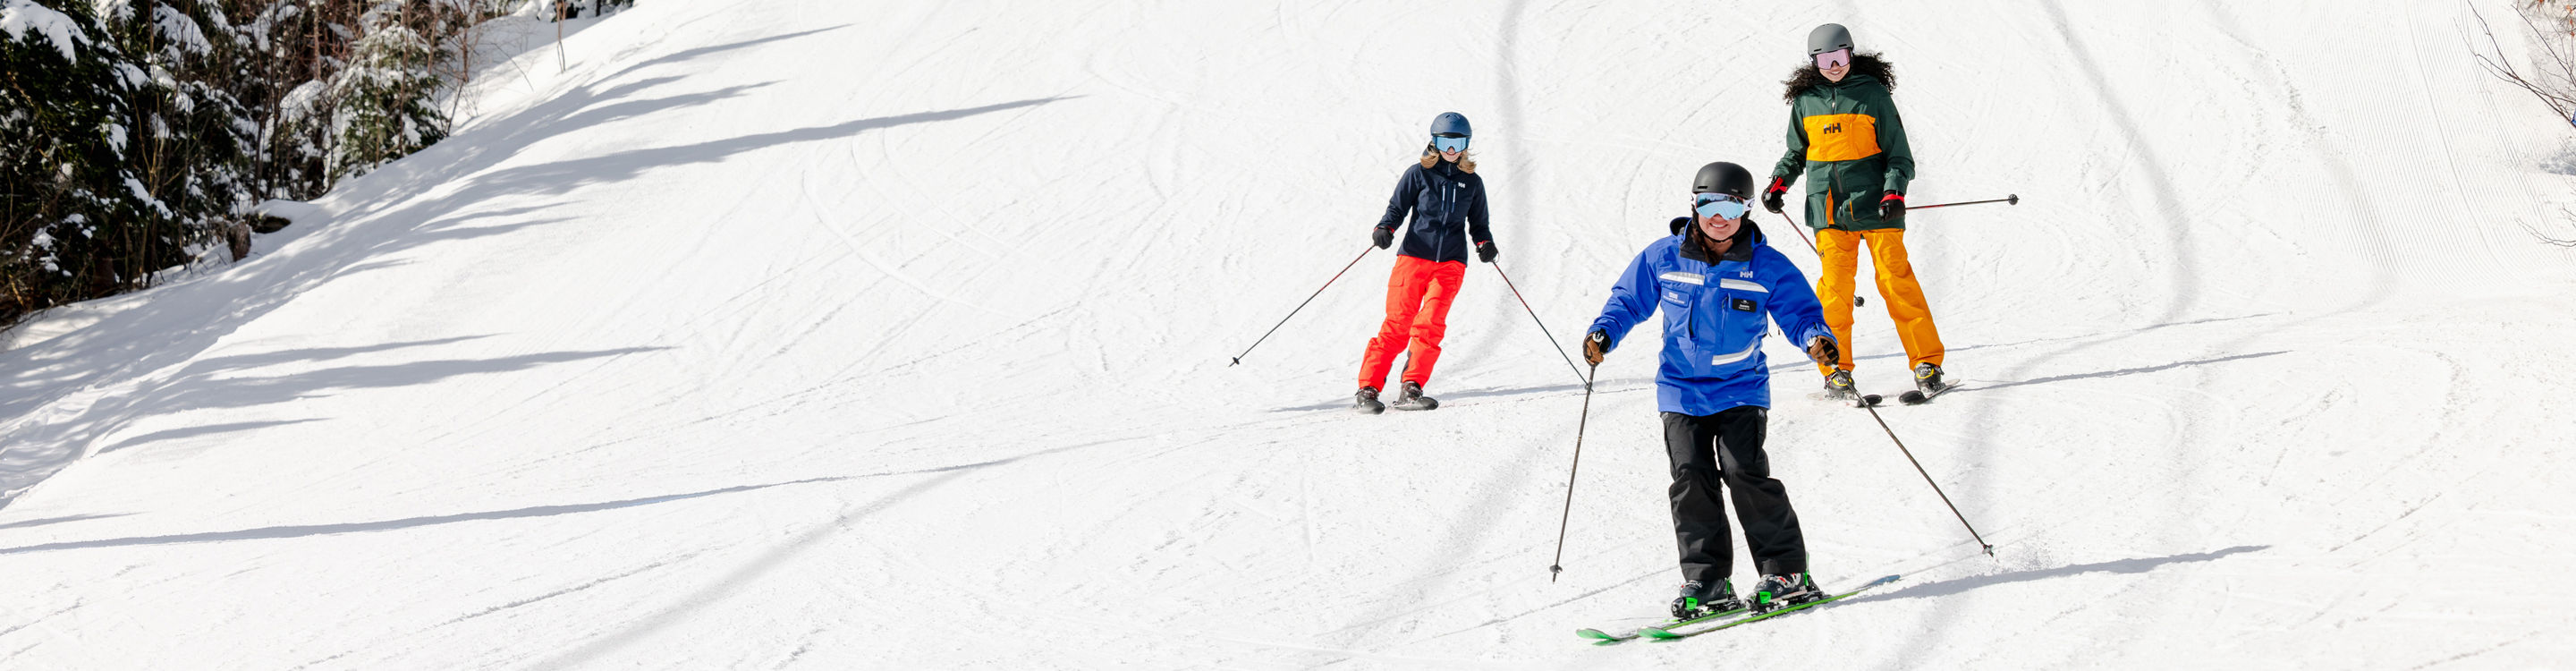 Vermont Ski and Snowboard School Mount Snow Ski Resort